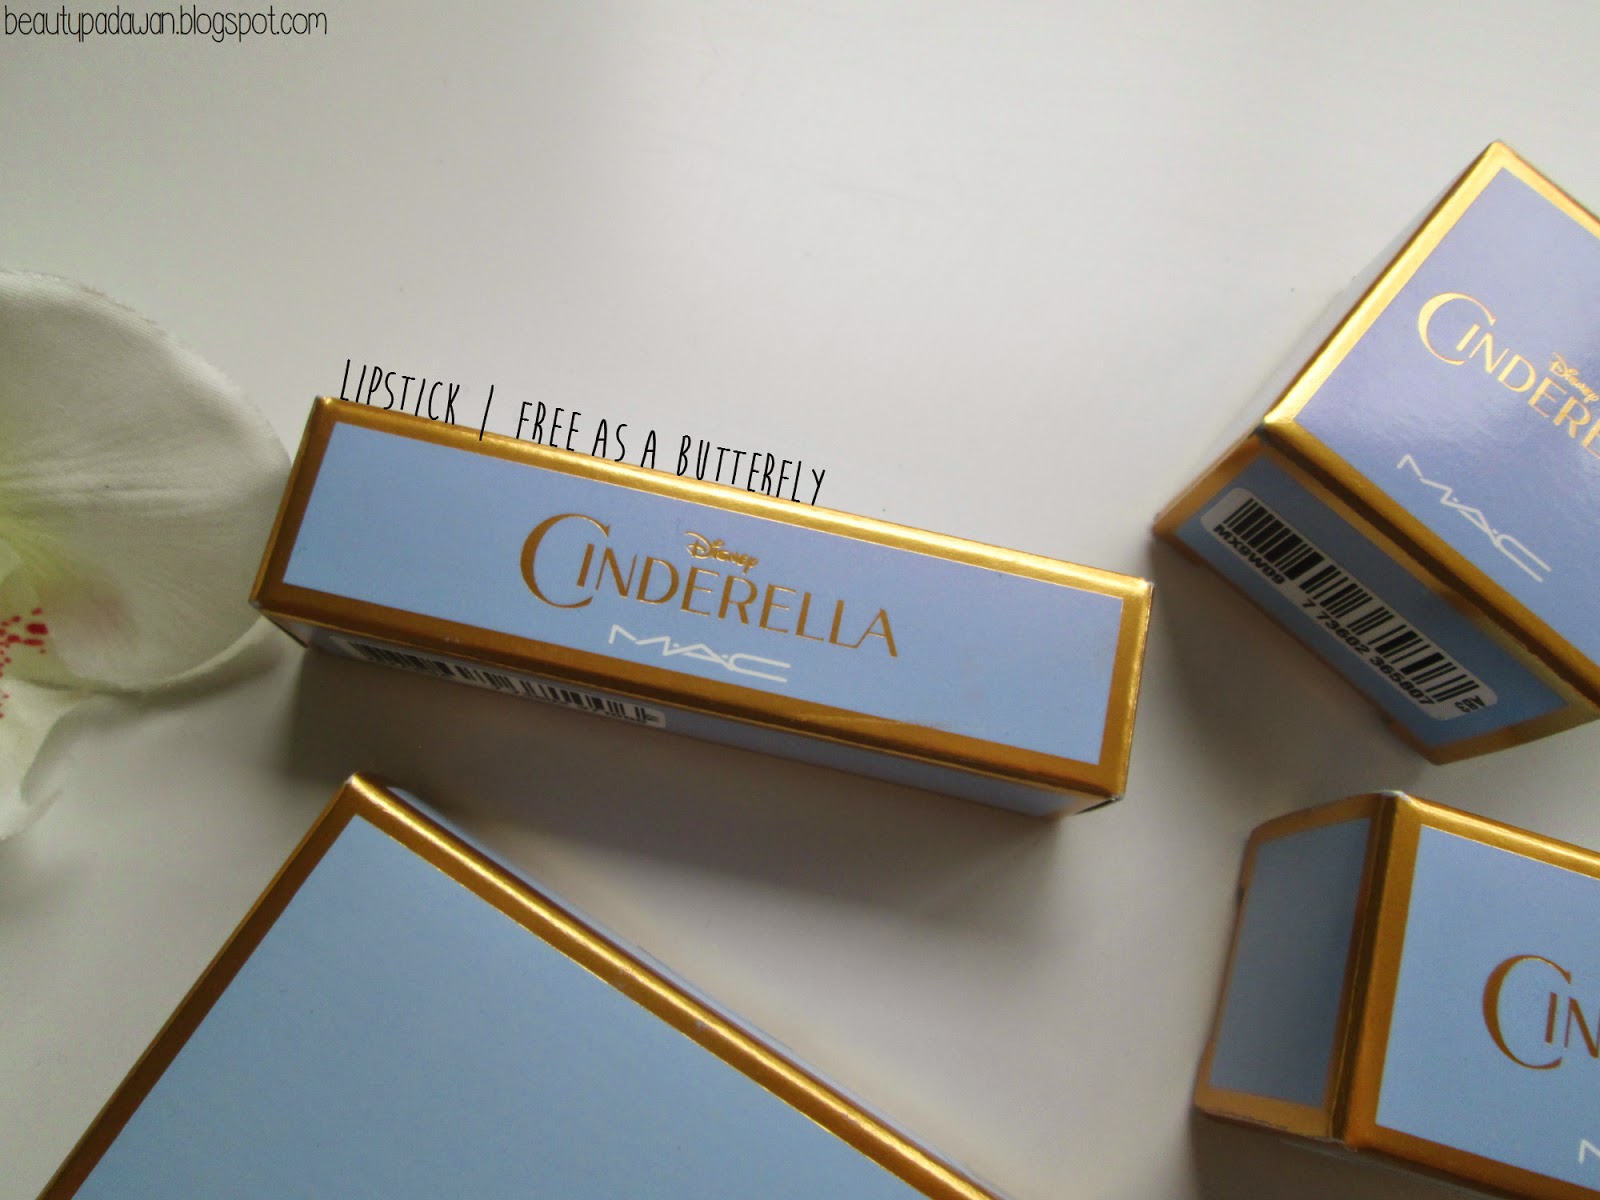 MAC Cinderella -  "Free As A Butterfly" lipstick